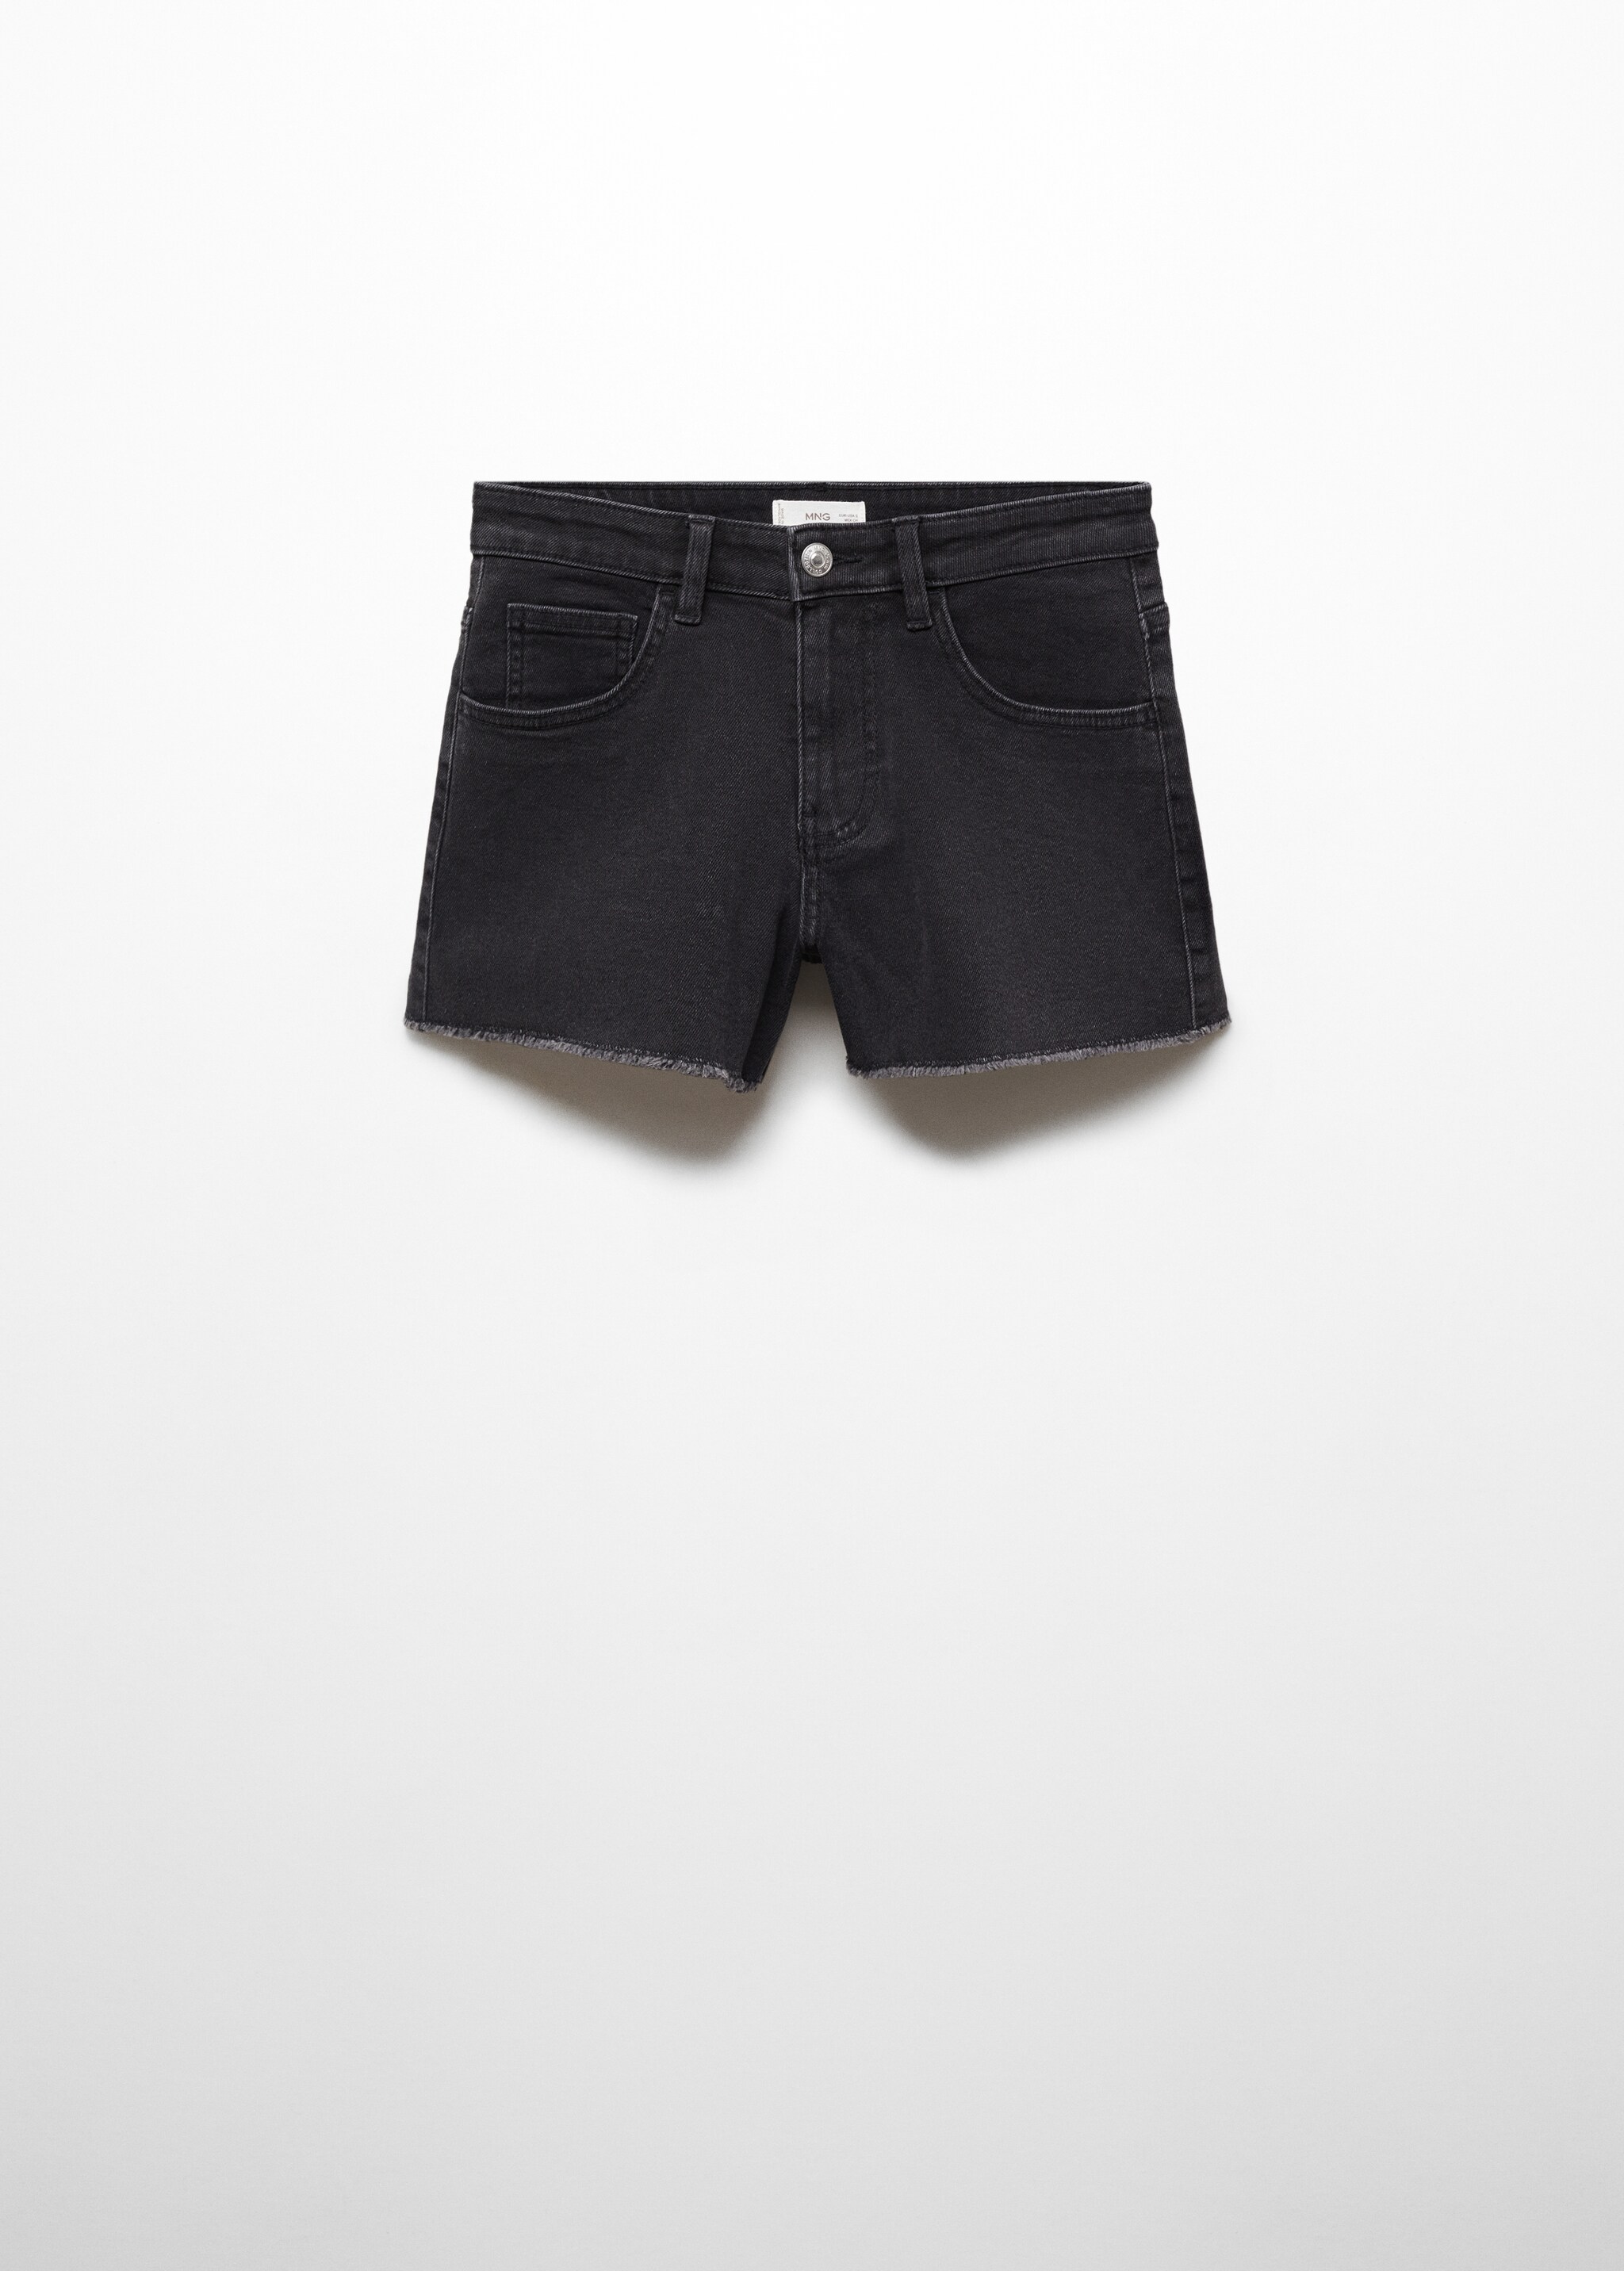 Medium-waist denim shorts - Article without model